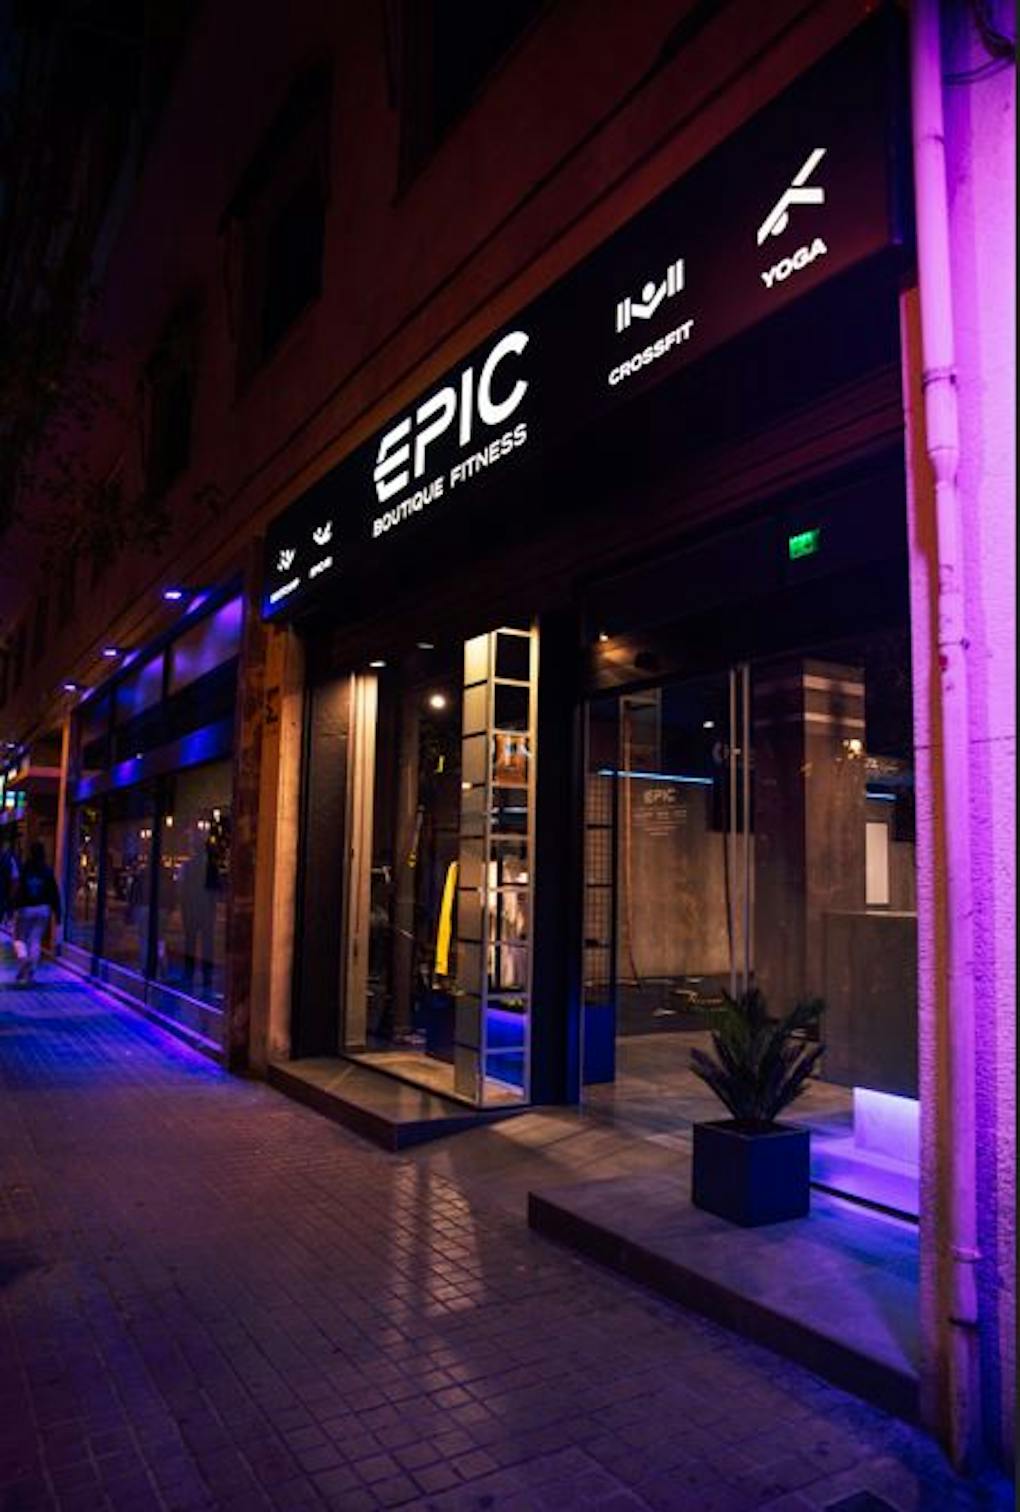 EPIC Boutique Fitness